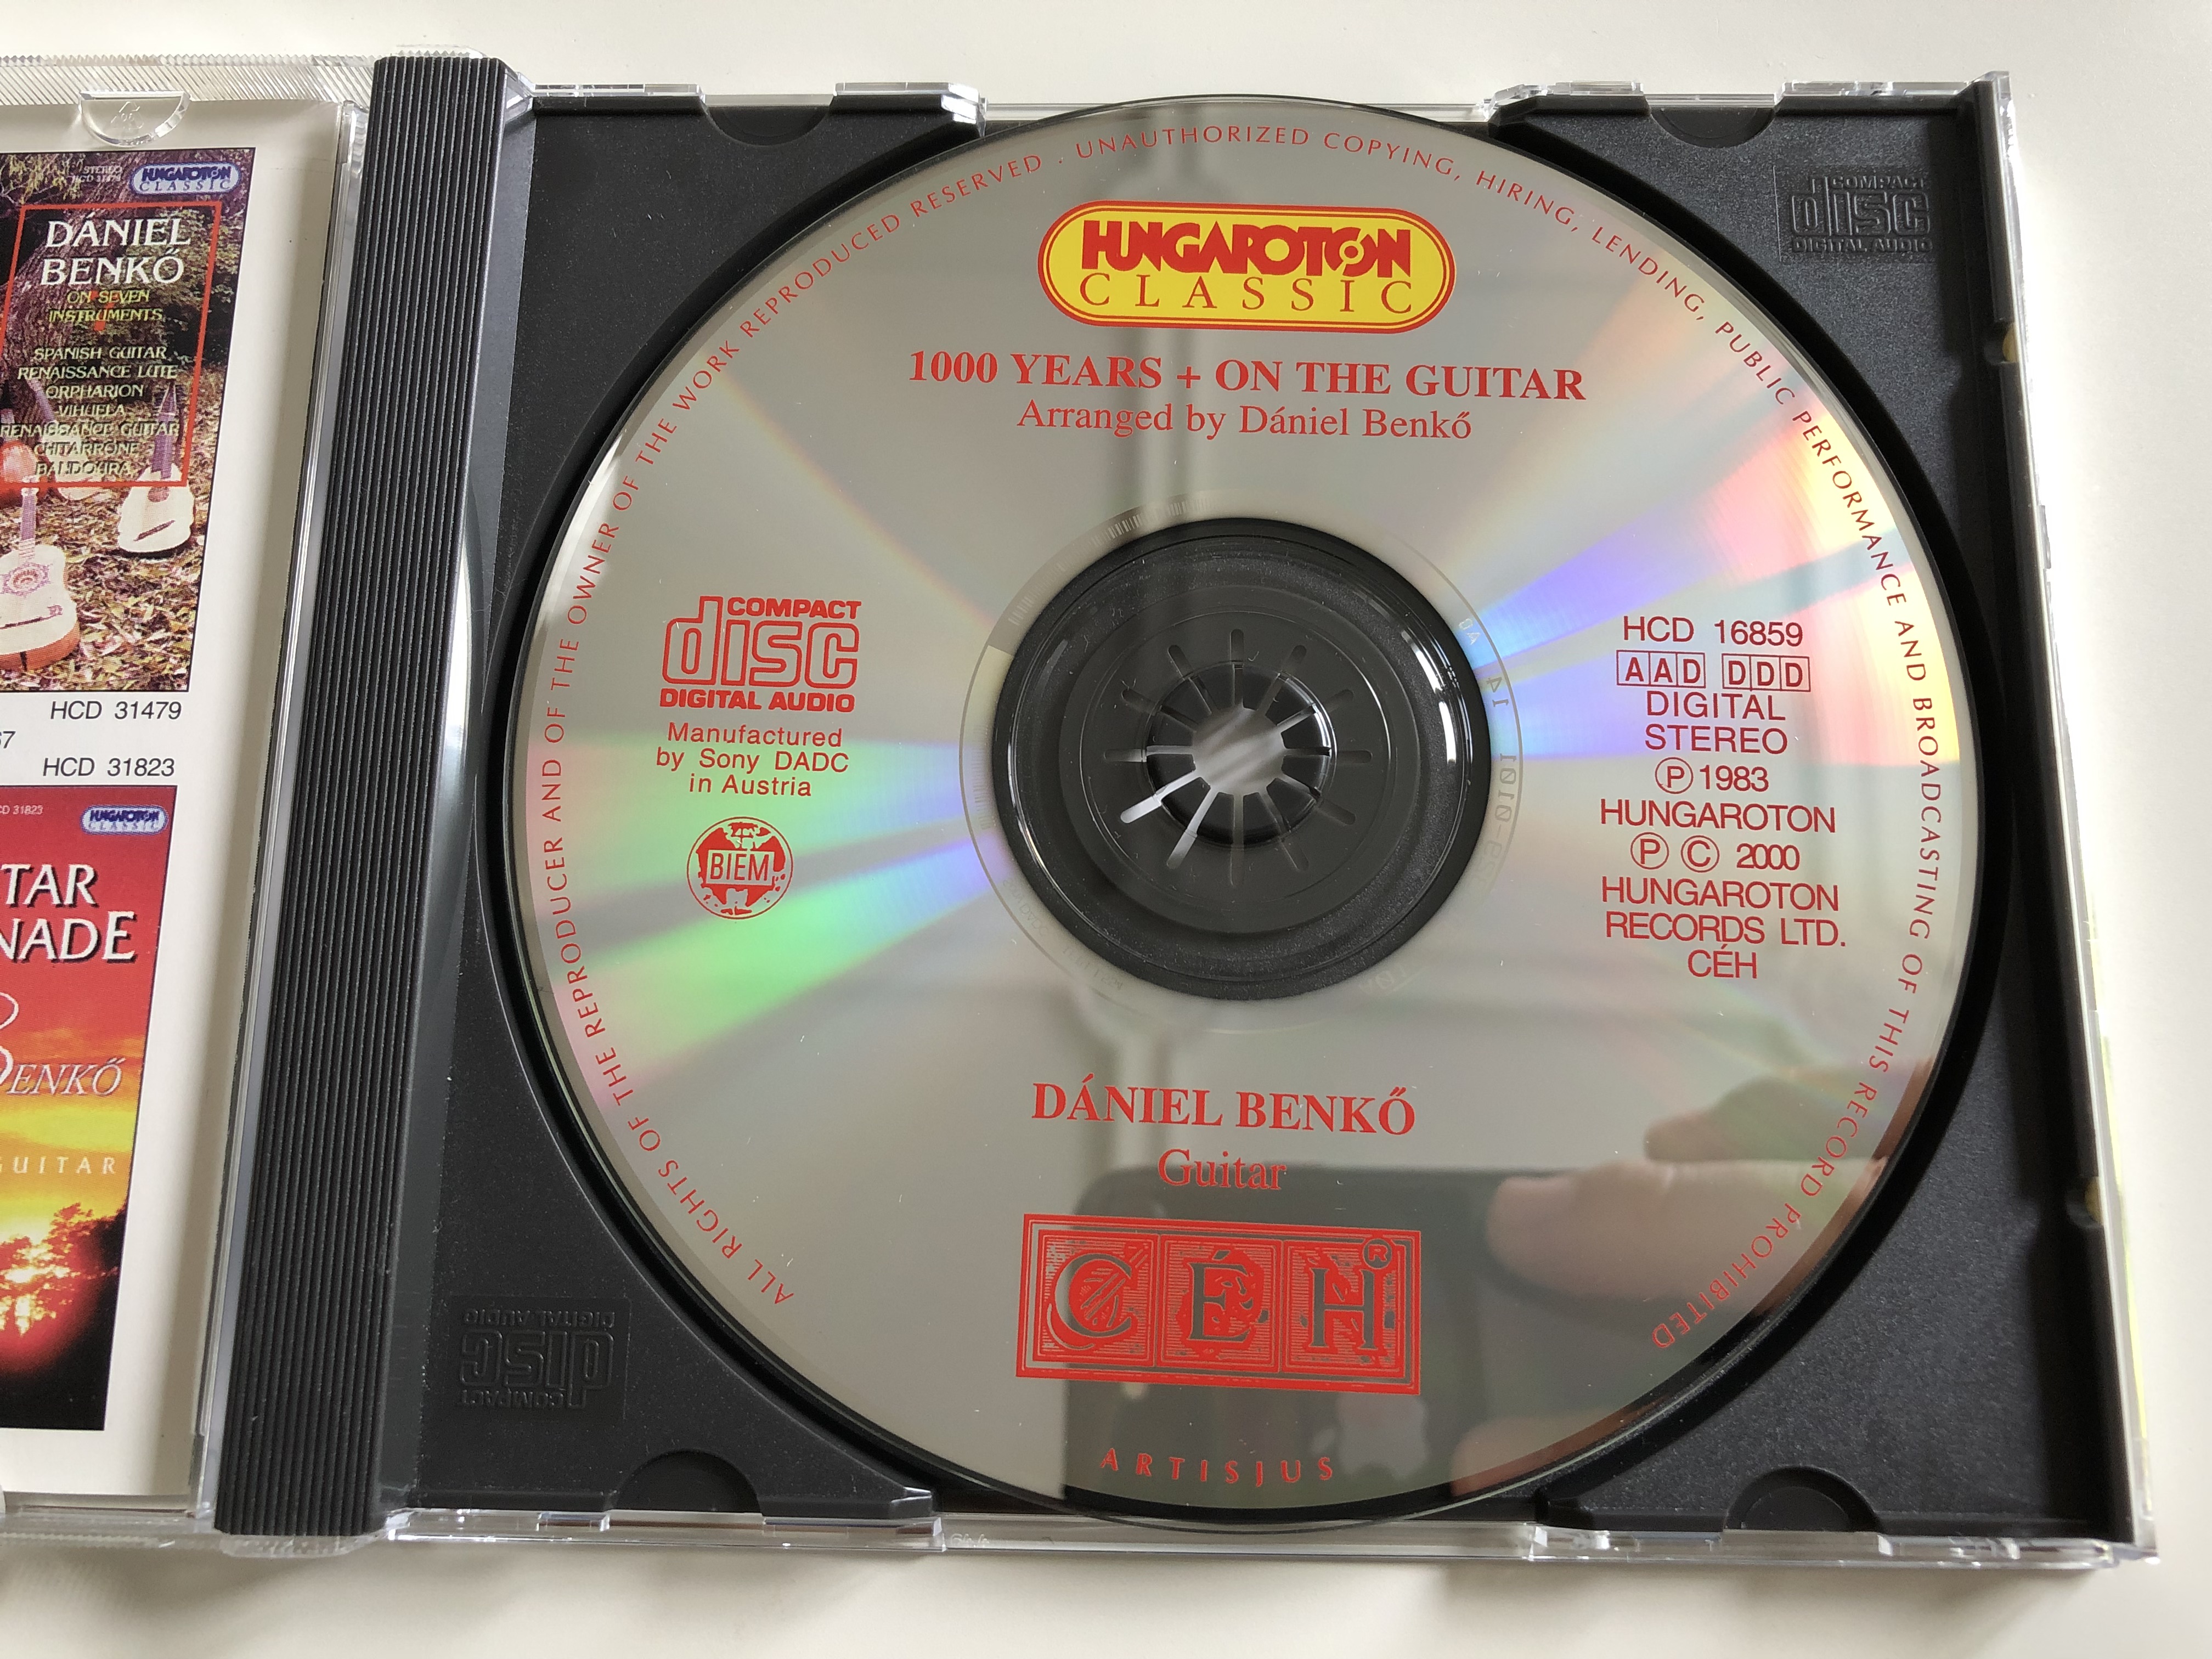 d-niel-benk-1000-years-on-the-guitar-hungaroton-classic-audio-cd-2000-hcd-16859-4-.jpg